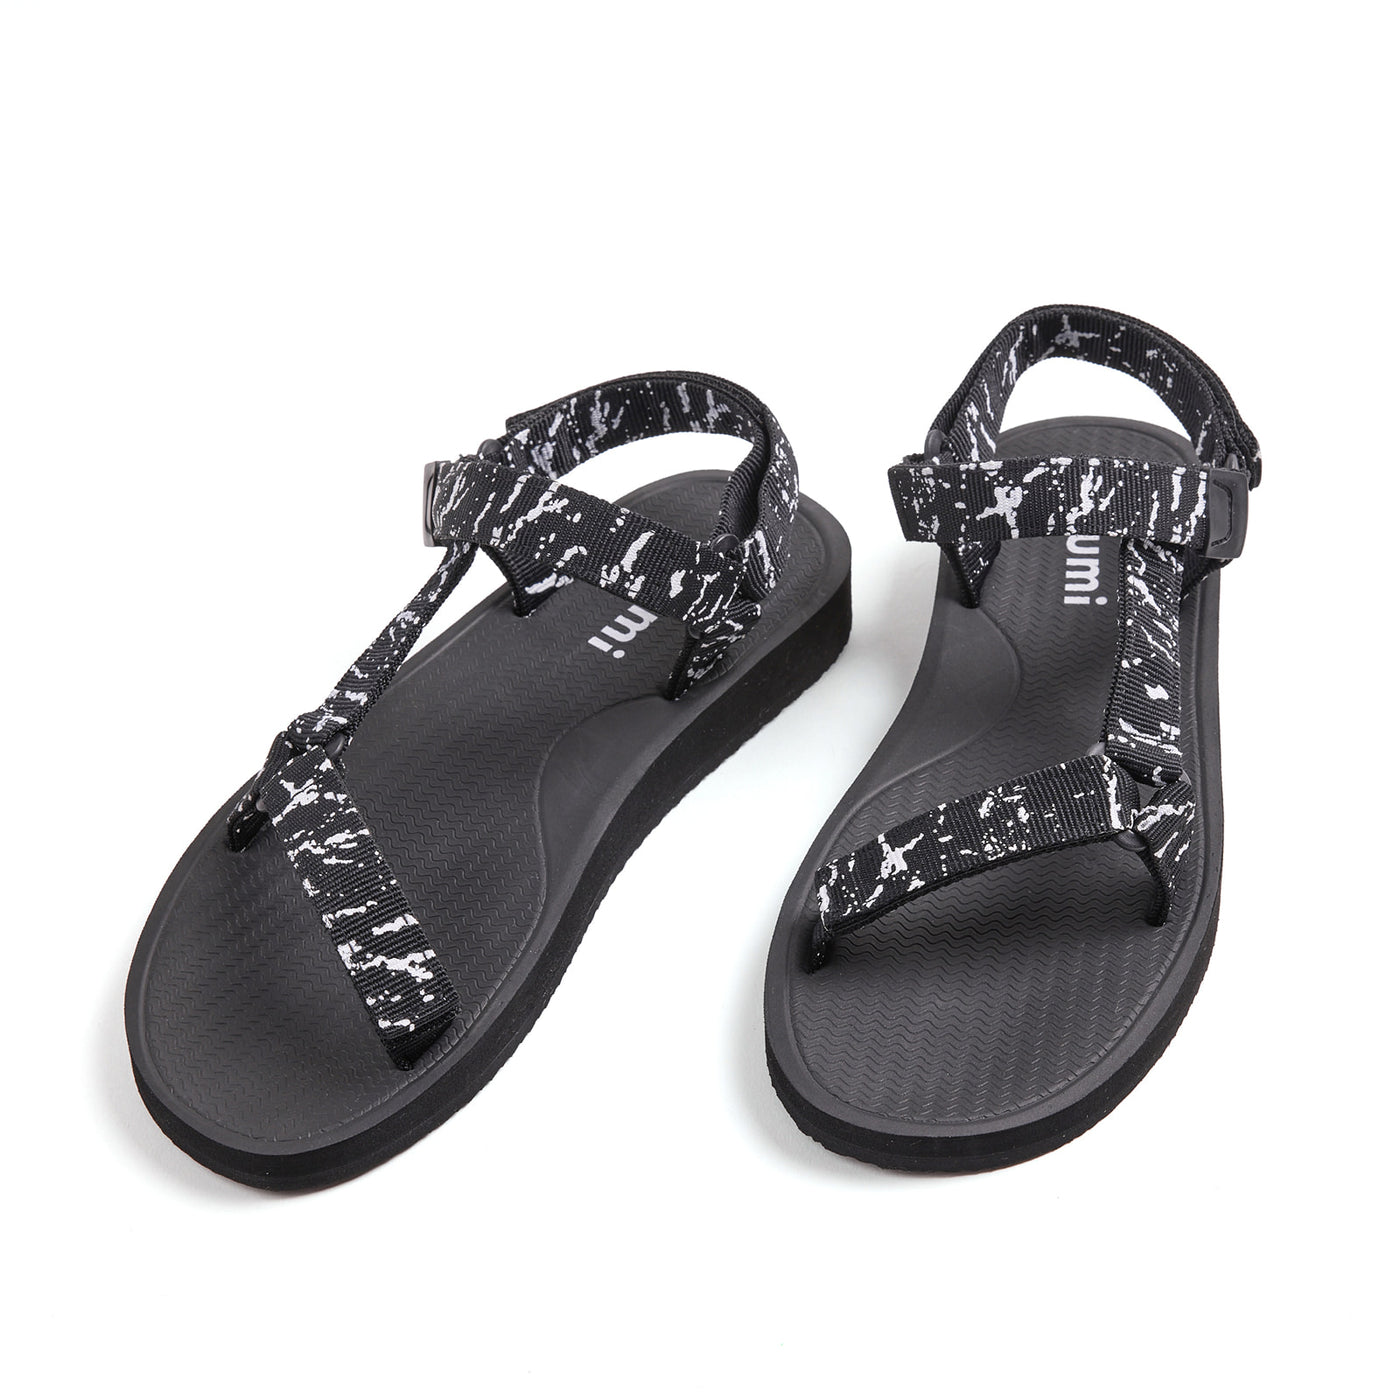 Black/white sandals